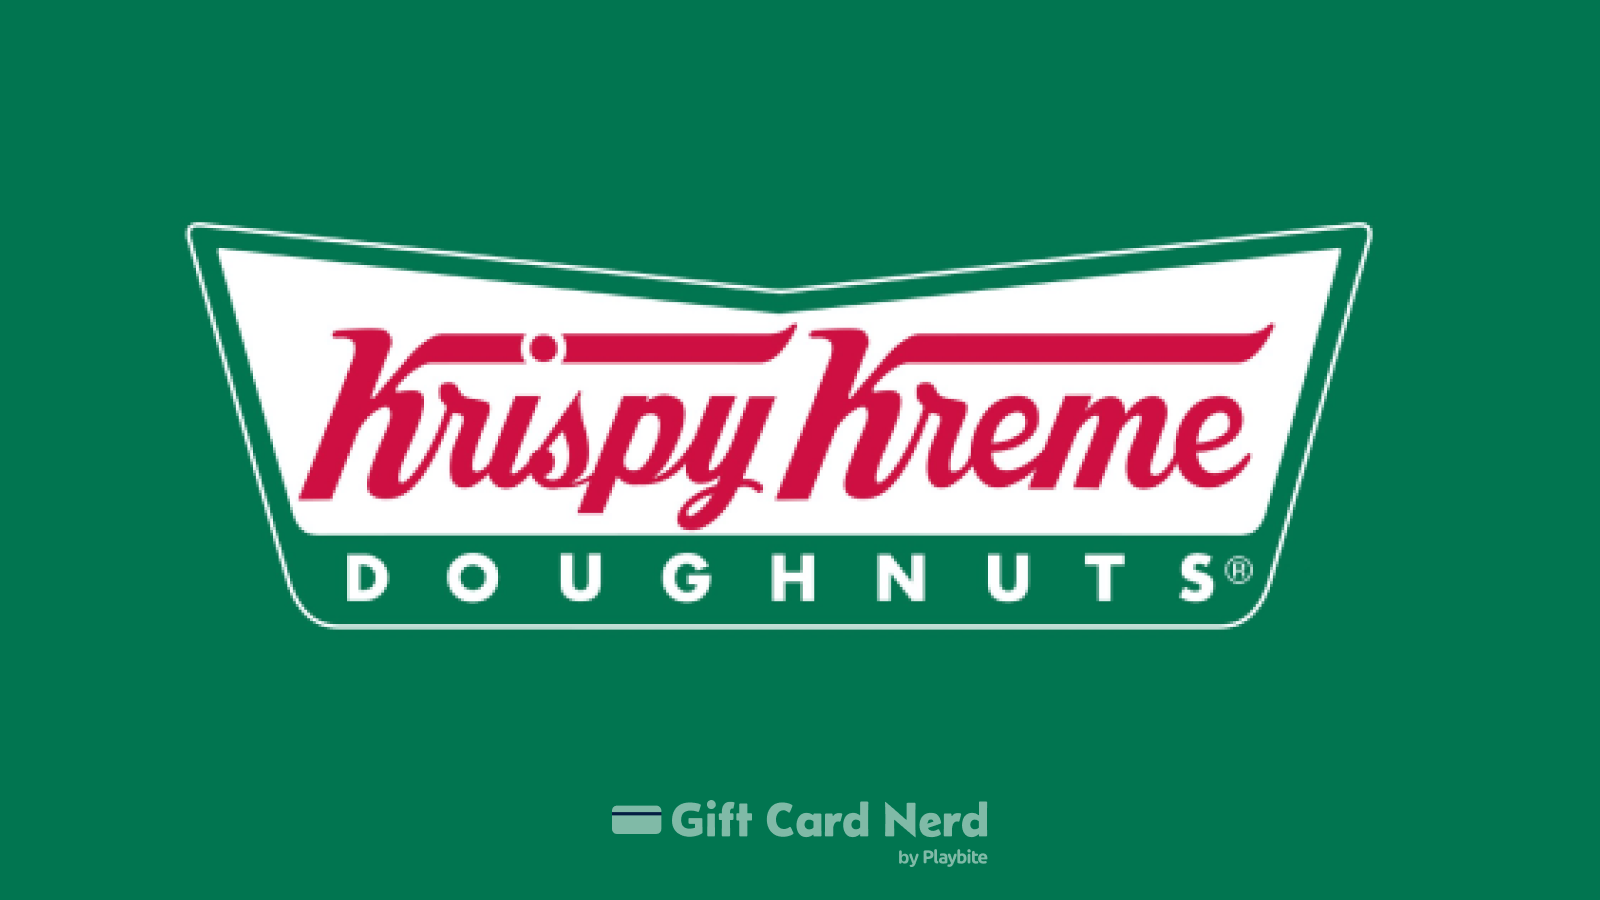 Can I Use a Krispy Kreme Gift Card on DoorDash?